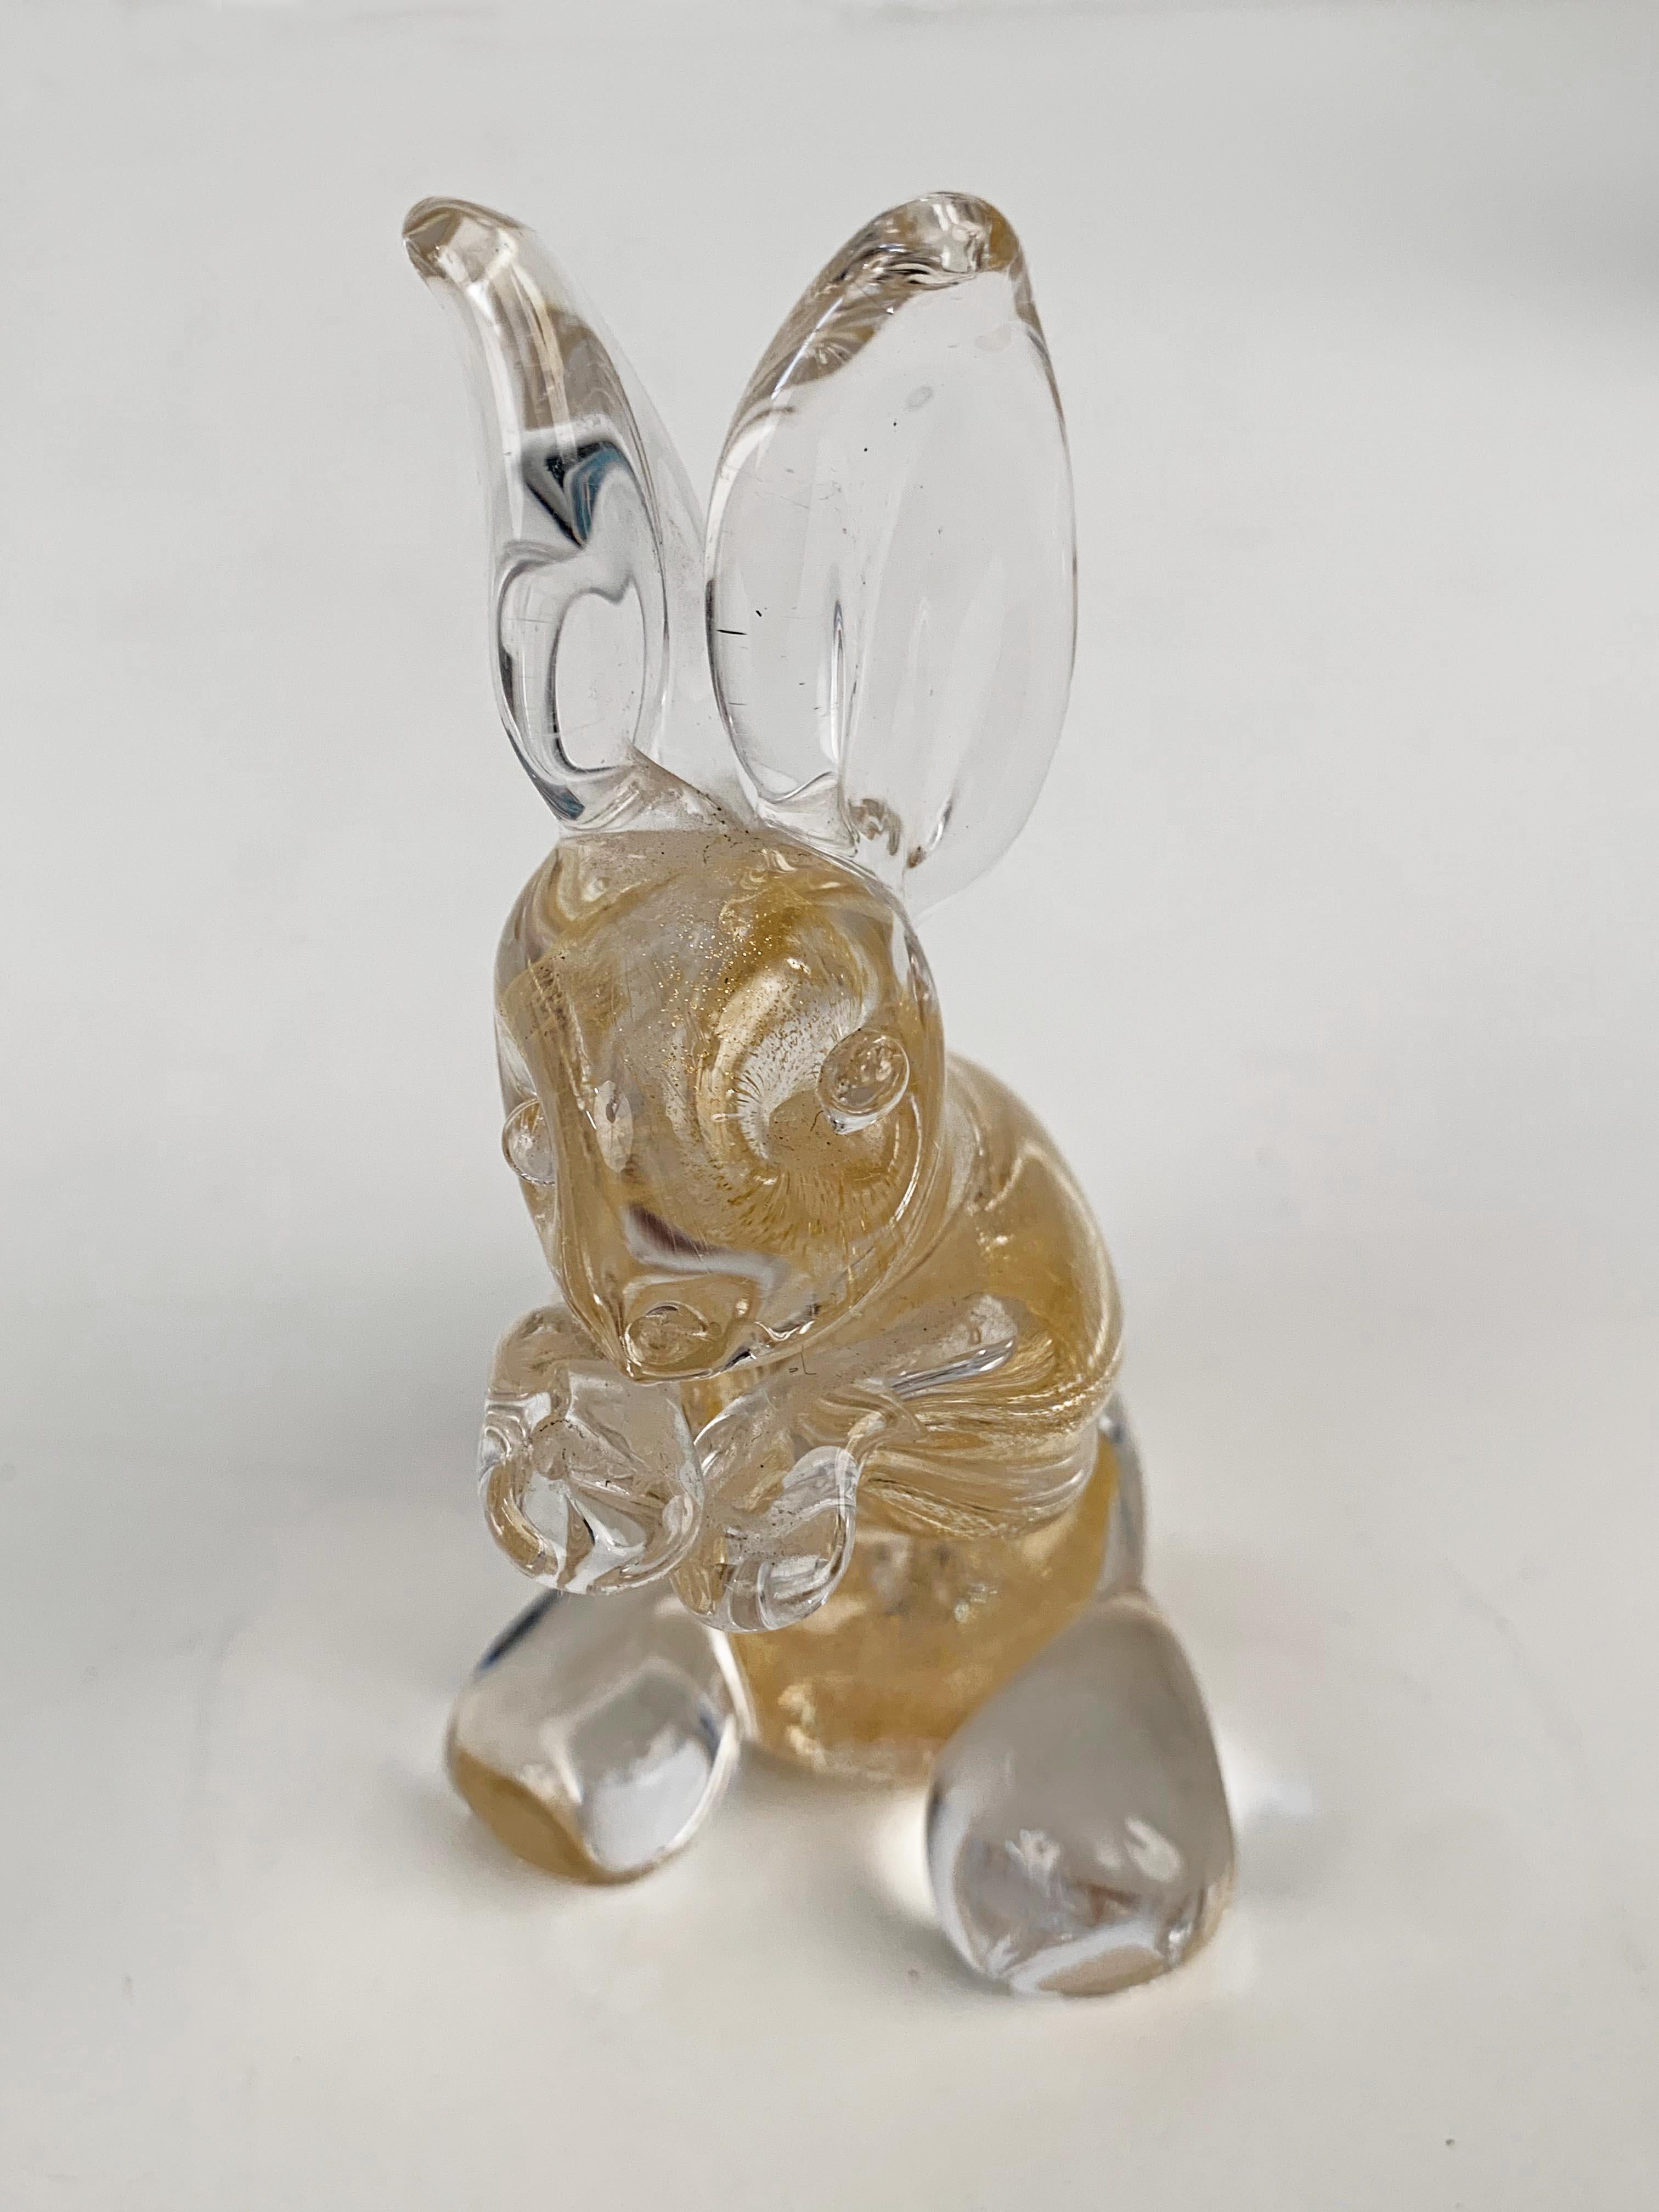 Seguso Midcentury Murano Glass Italian Rabbit Sculpture with Golden Dots, 1960s For Sale 5